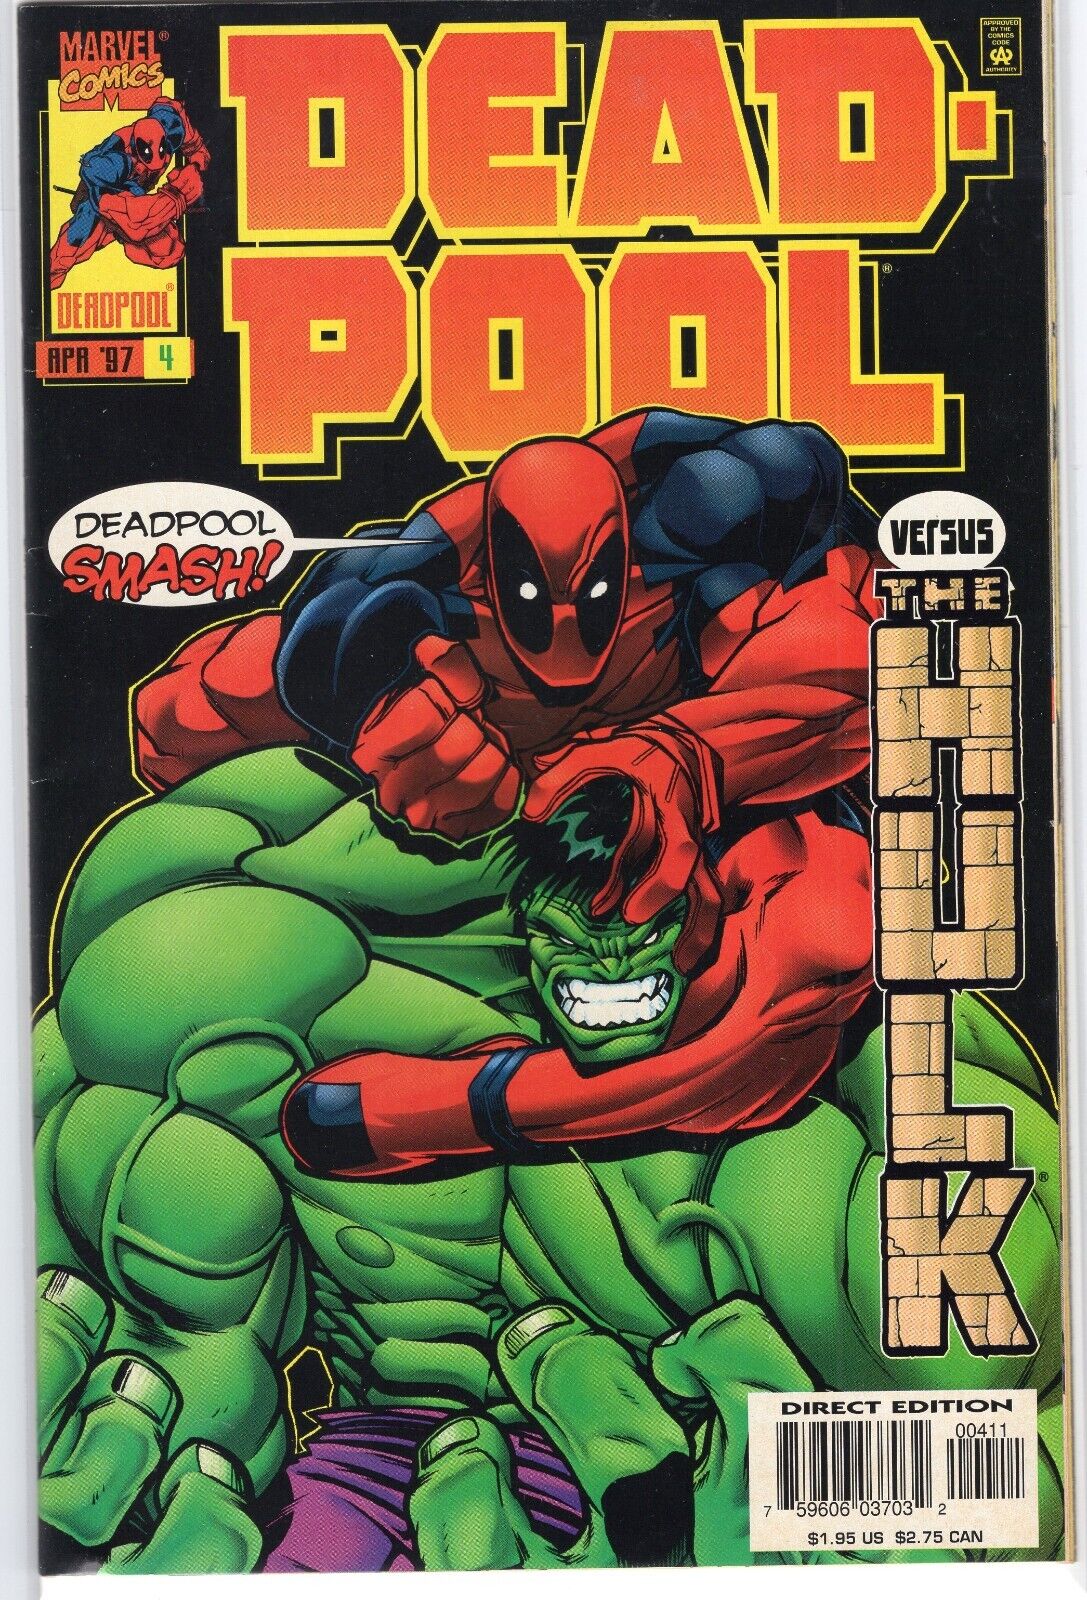 Deadpool #4 (Marvel 1997) Deadpool VS HULK fight by Ed McGuinness